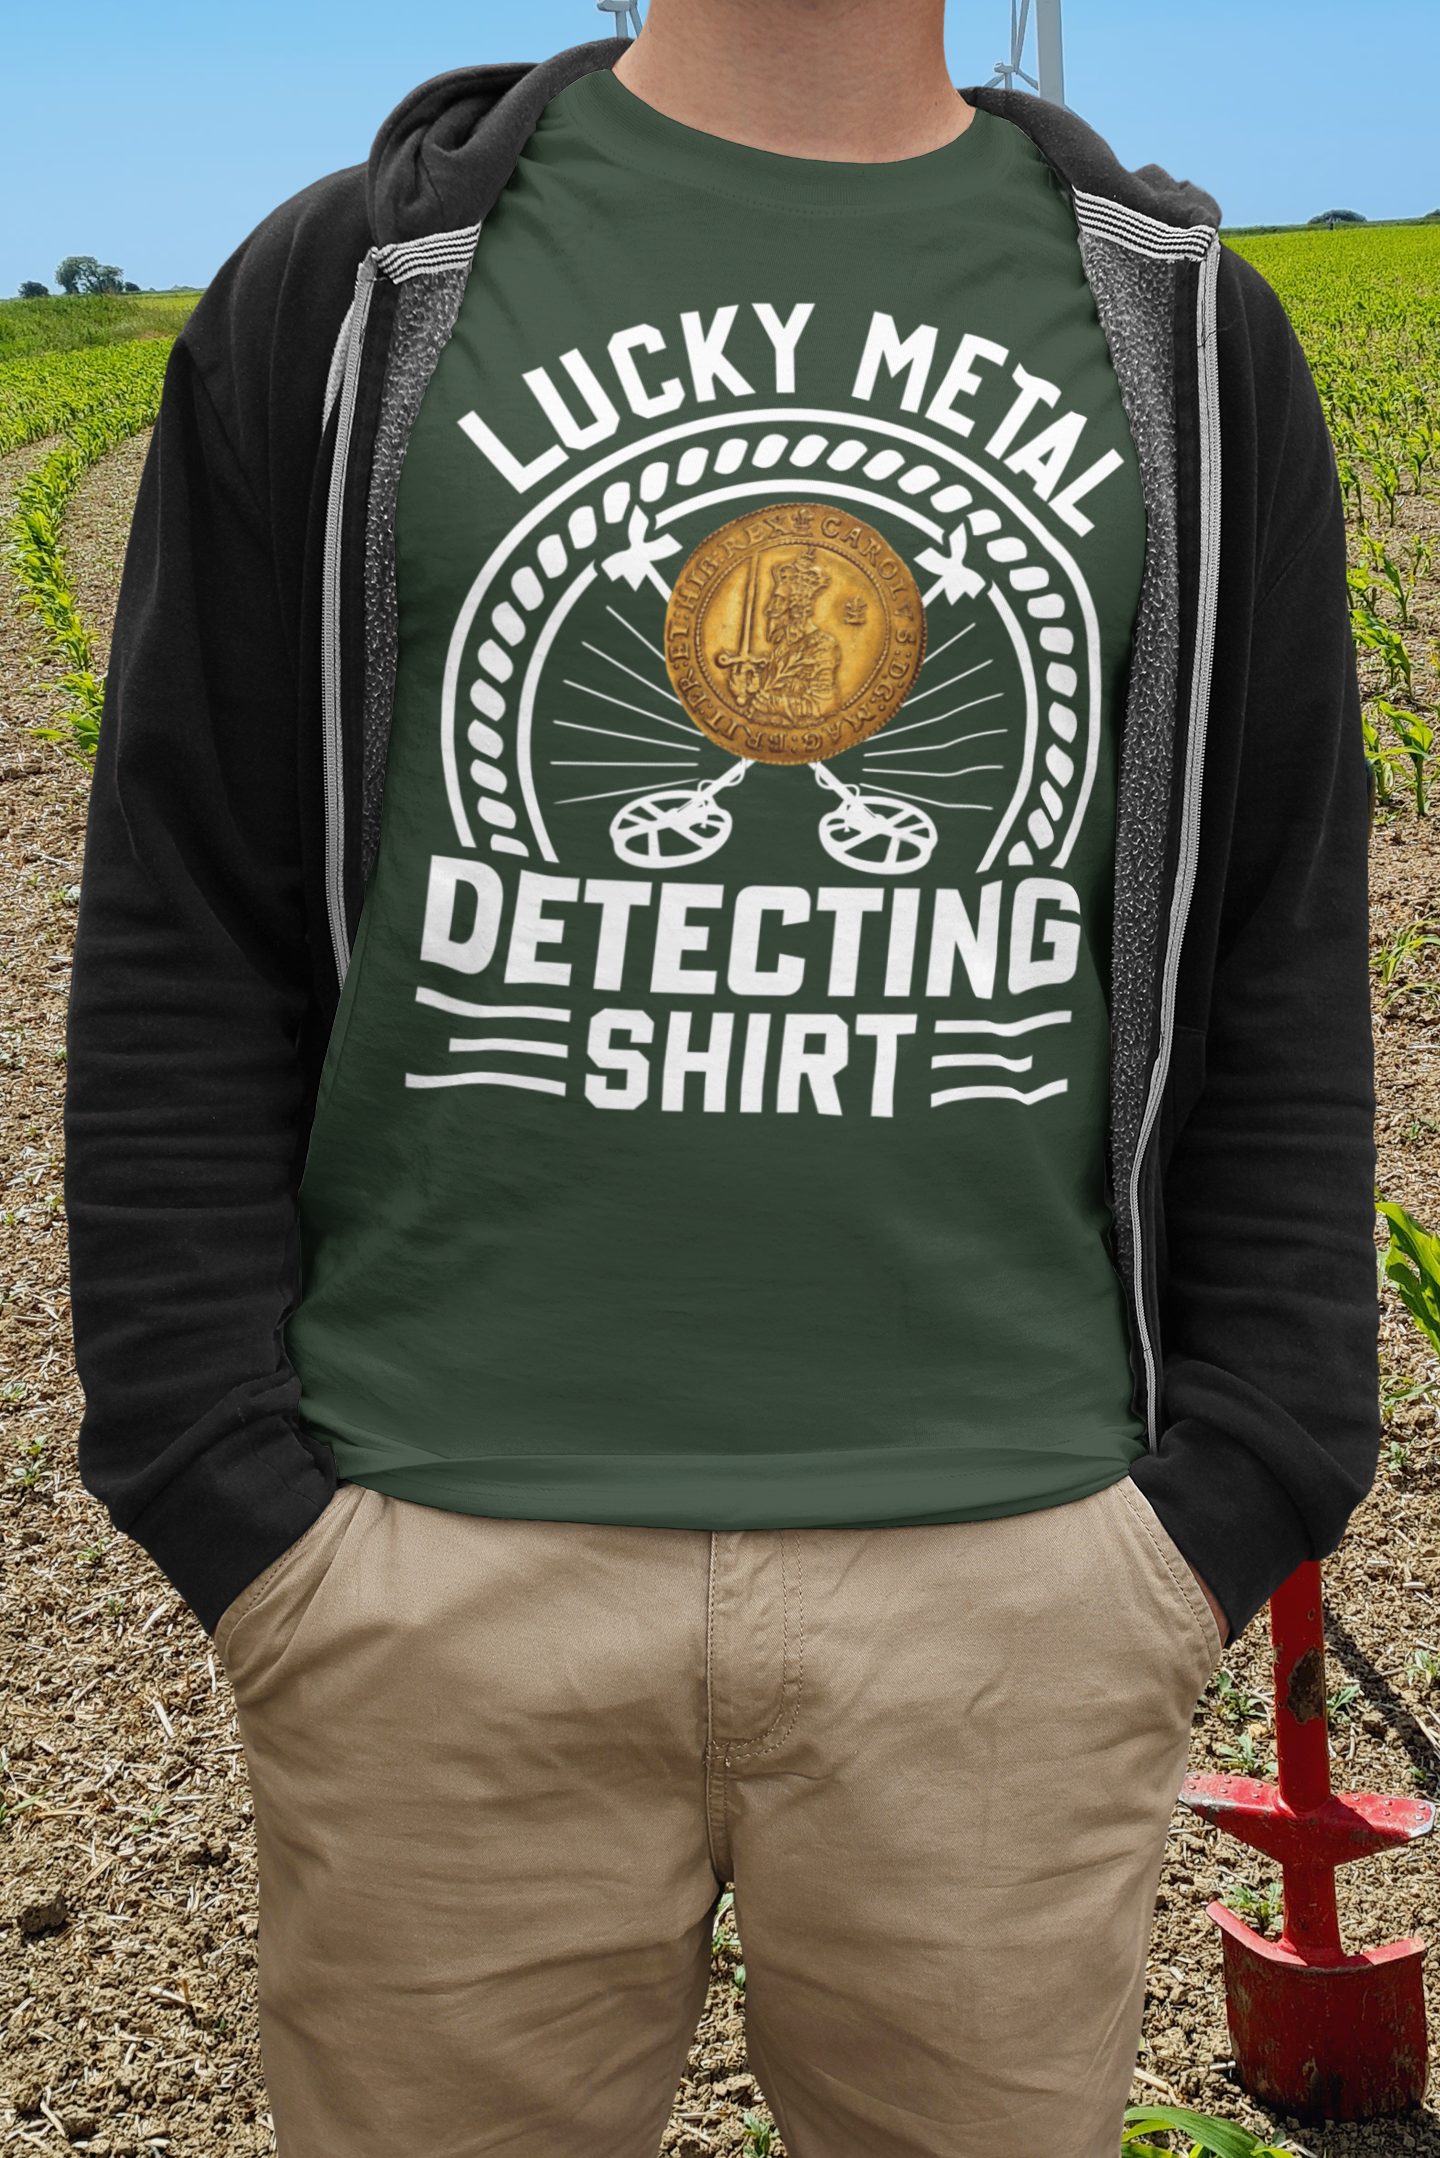 Lucky metal detecting T-shirt